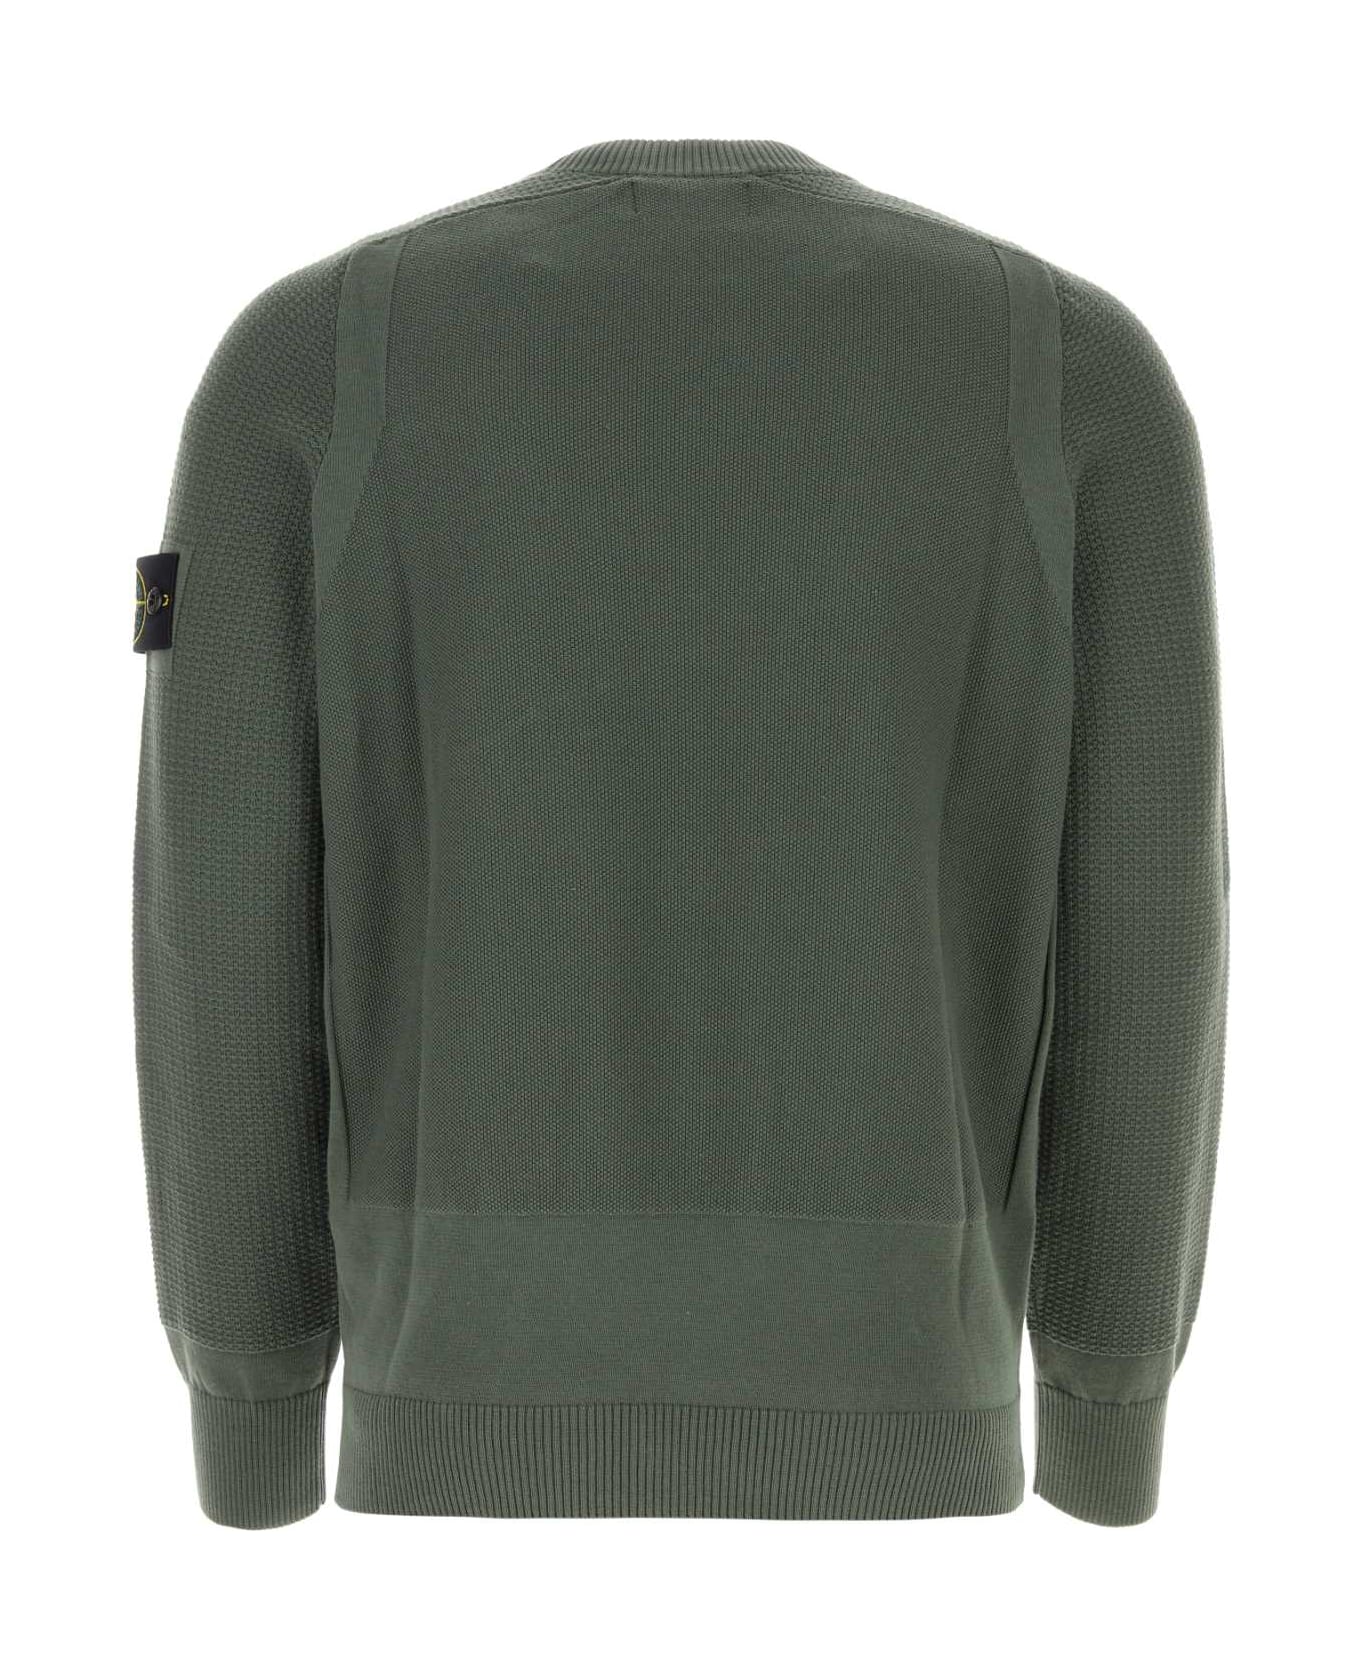 Stone Island Sage Green Cotton Sweater - MUSCHIO ニットウェア